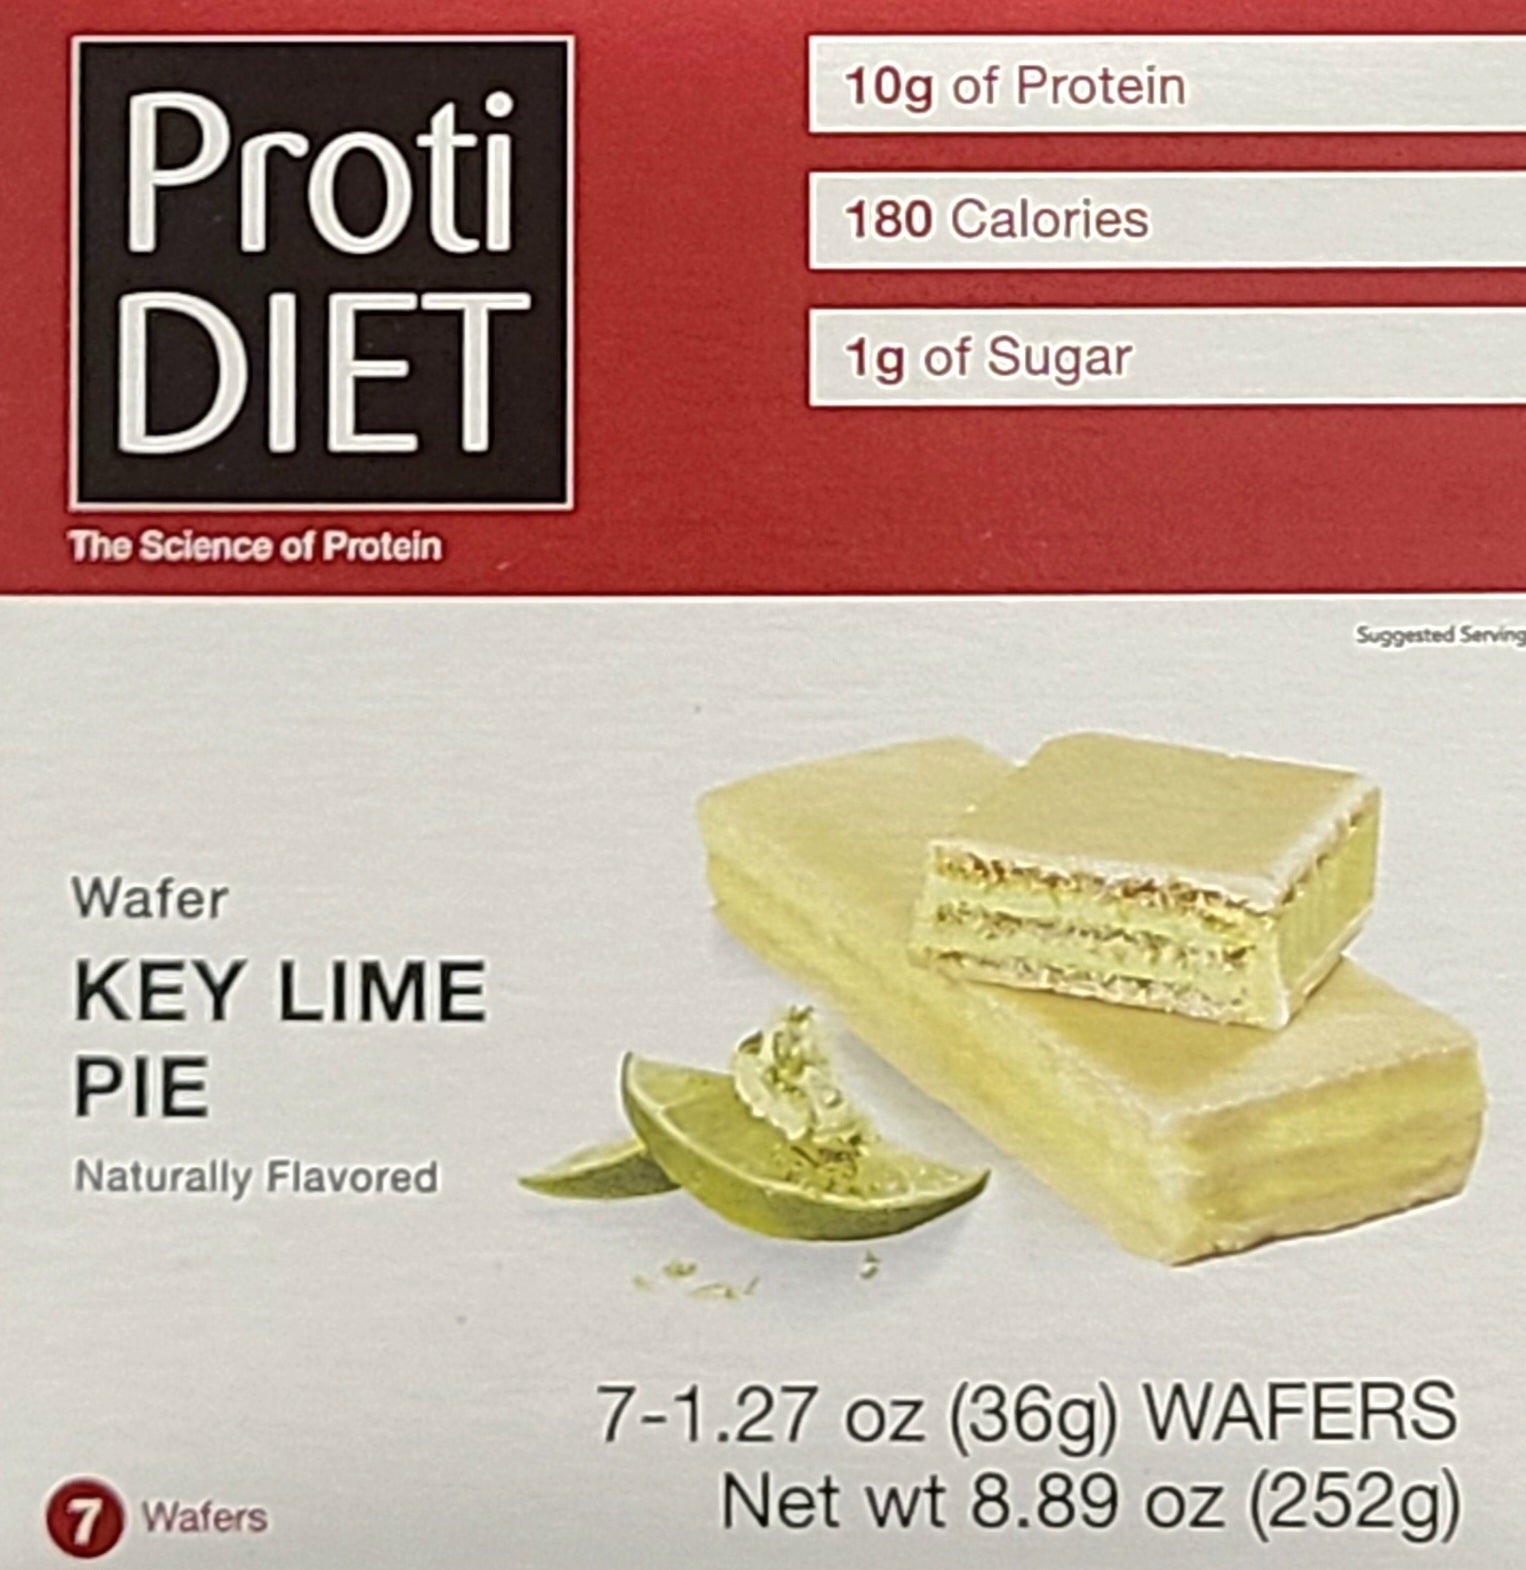 Key Lime Pie Wafer - ProtiDiet